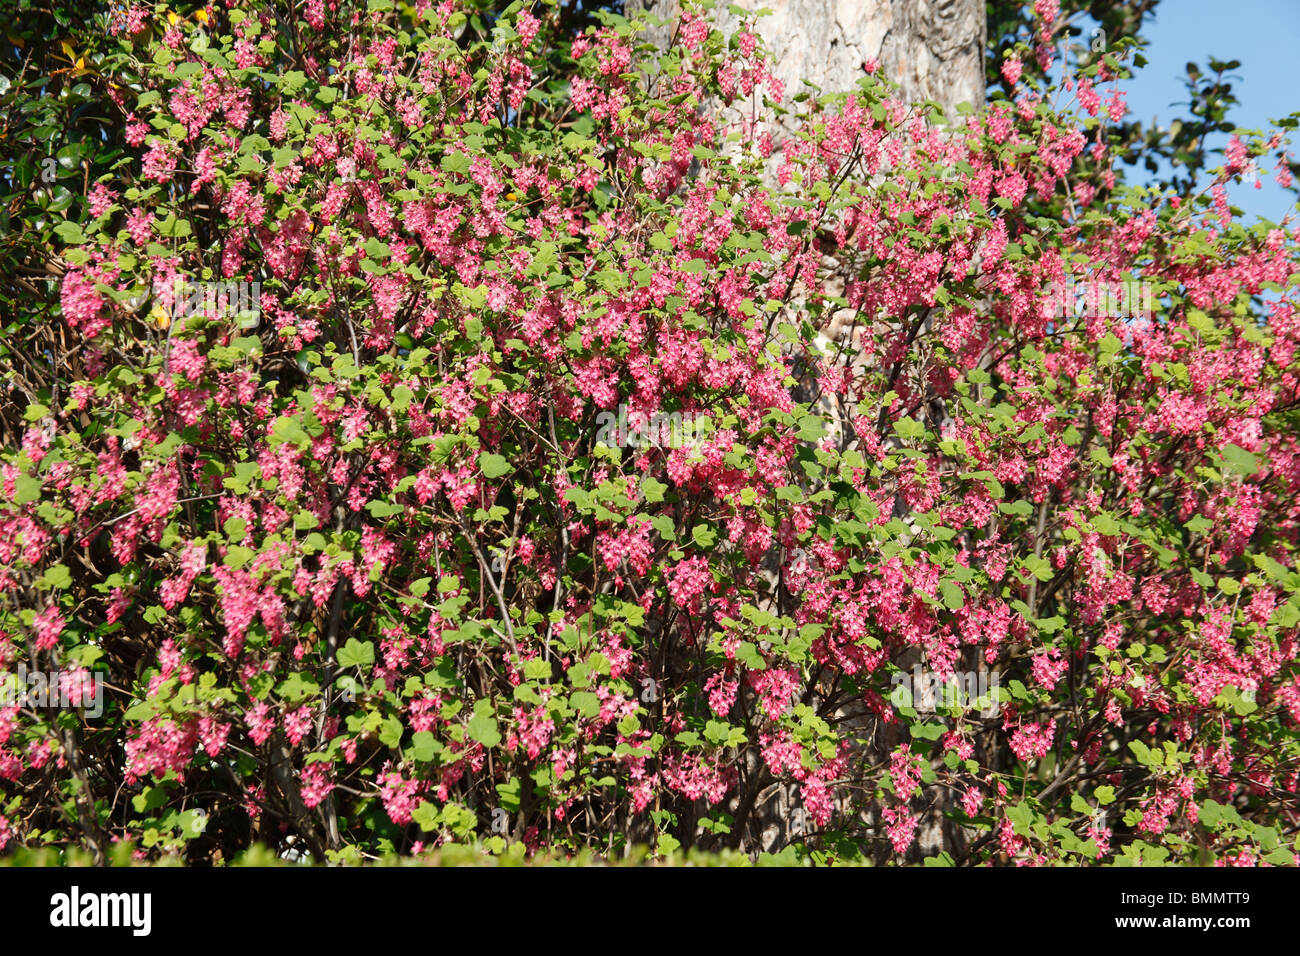 Flowering currant plants flowering in hedge Stock Photo